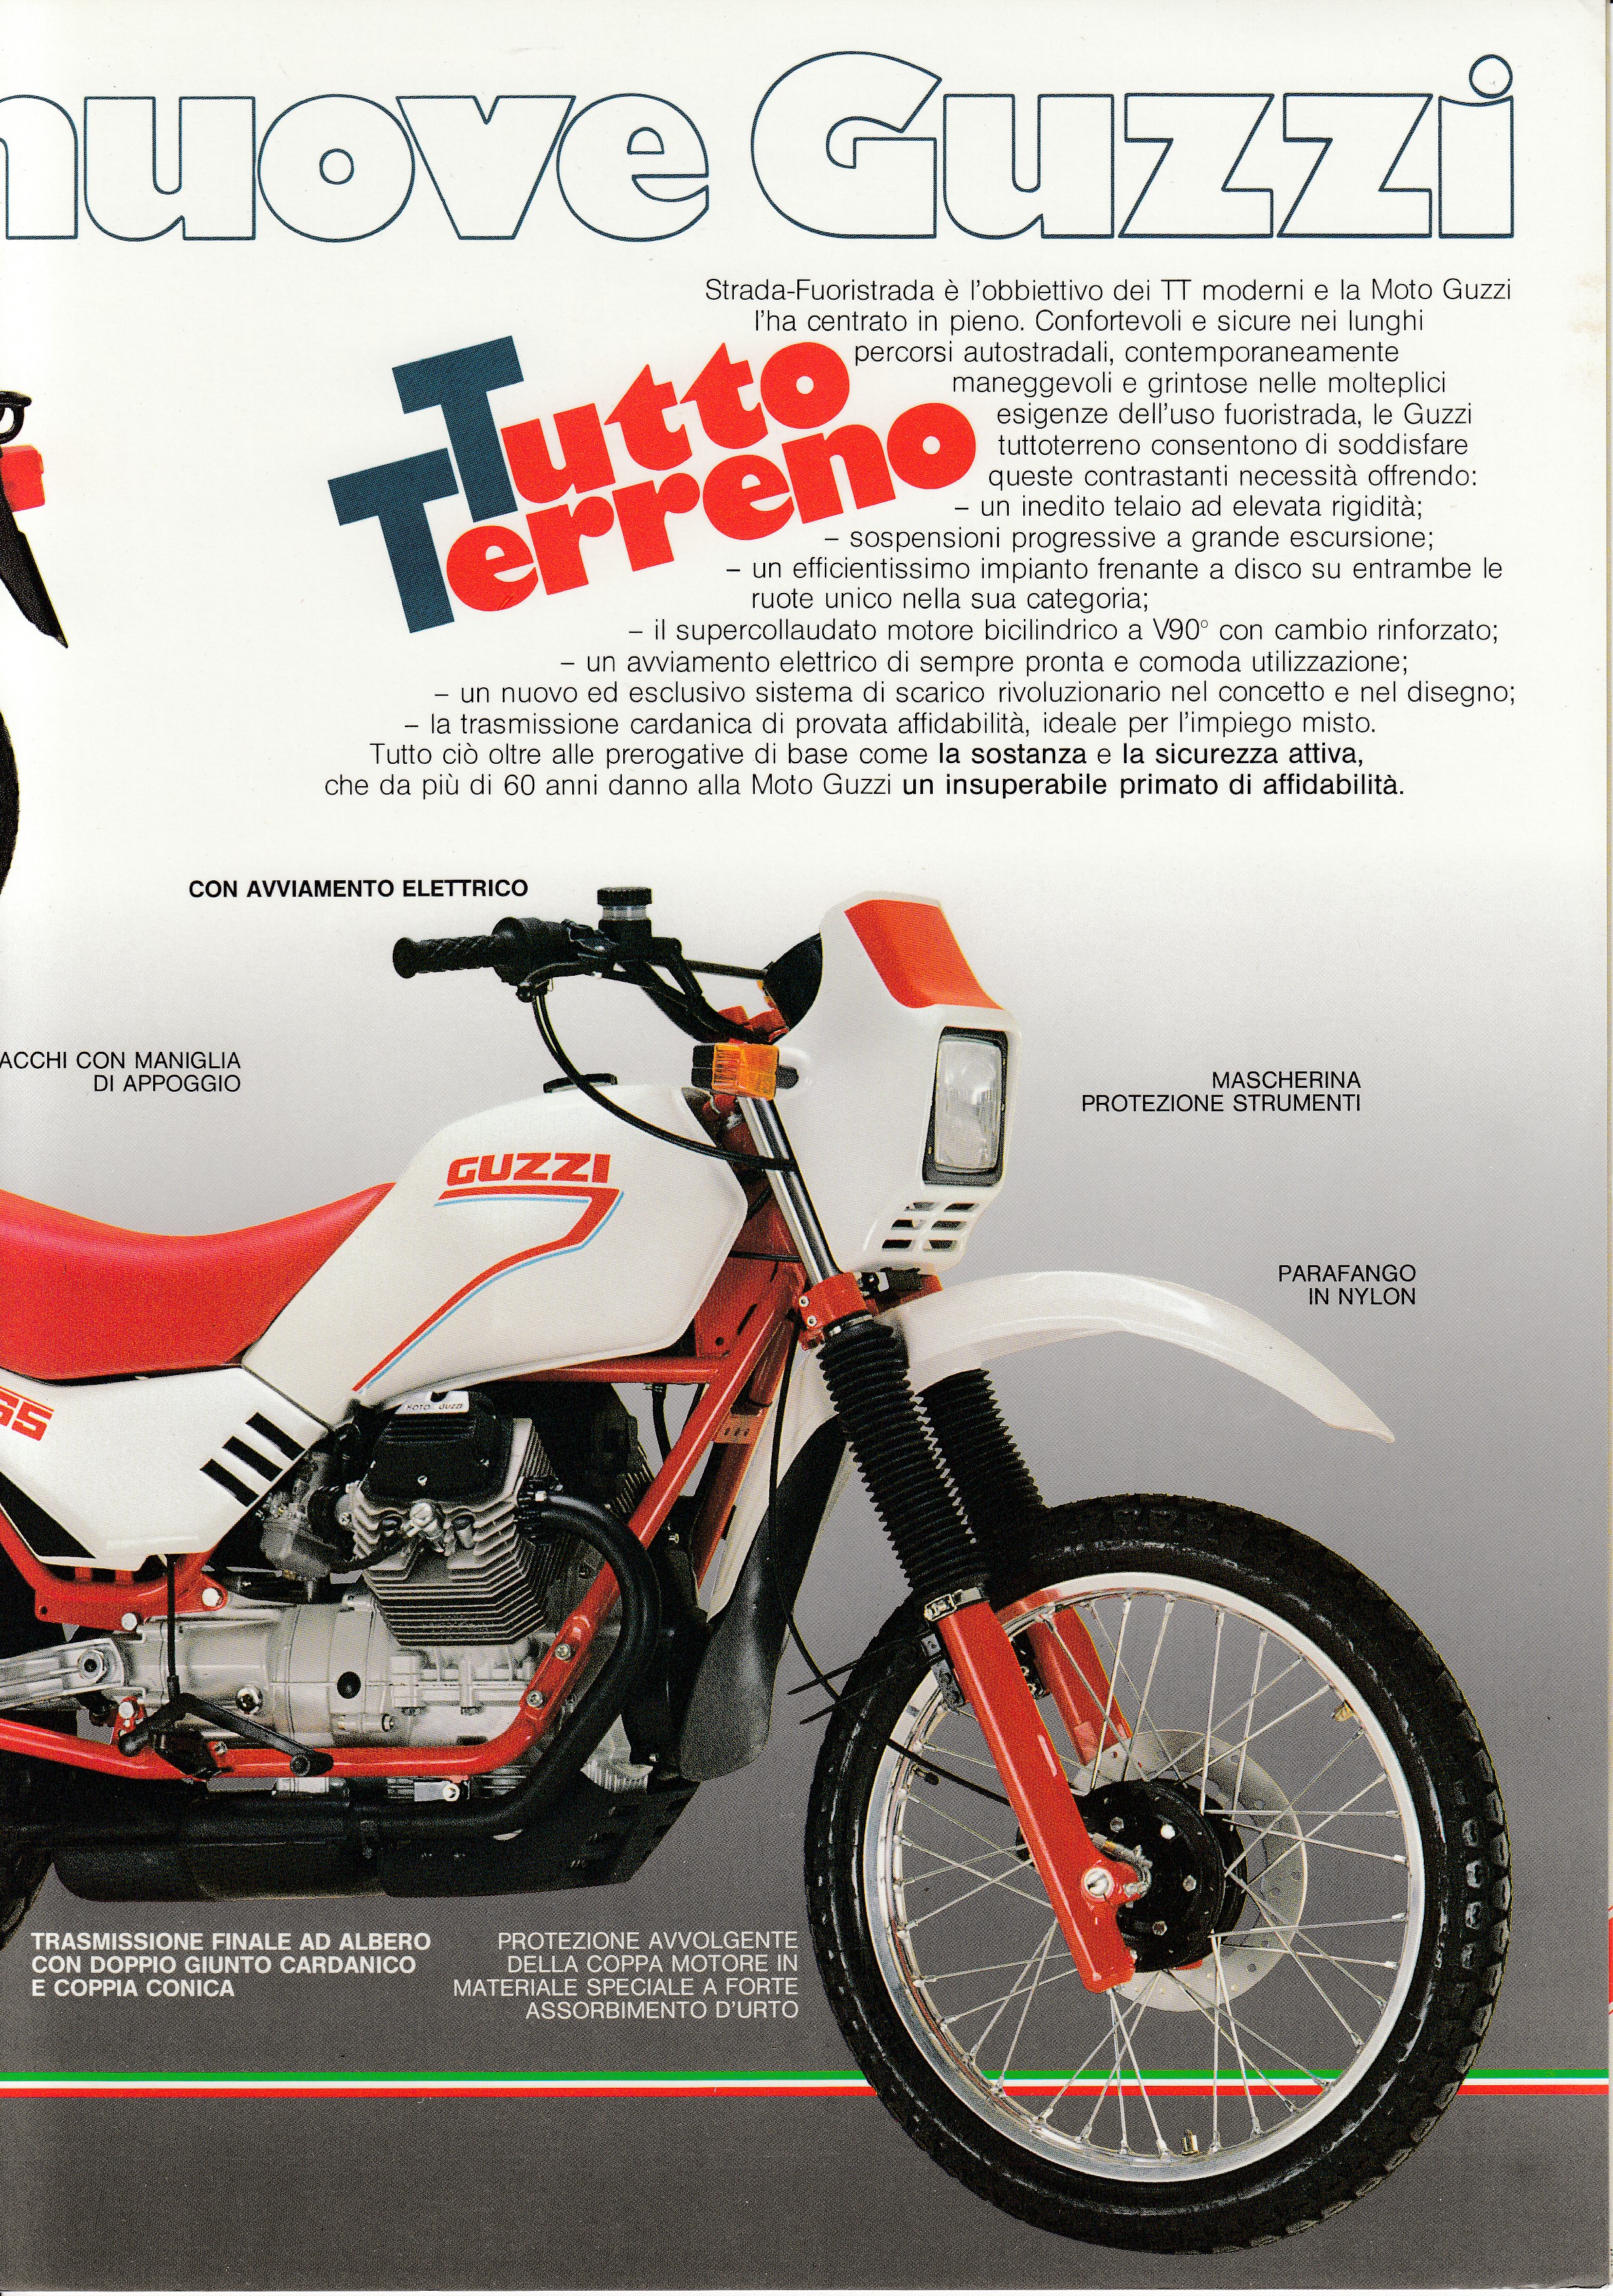 Brochure - Moto Guzzi V65TT (Italian)